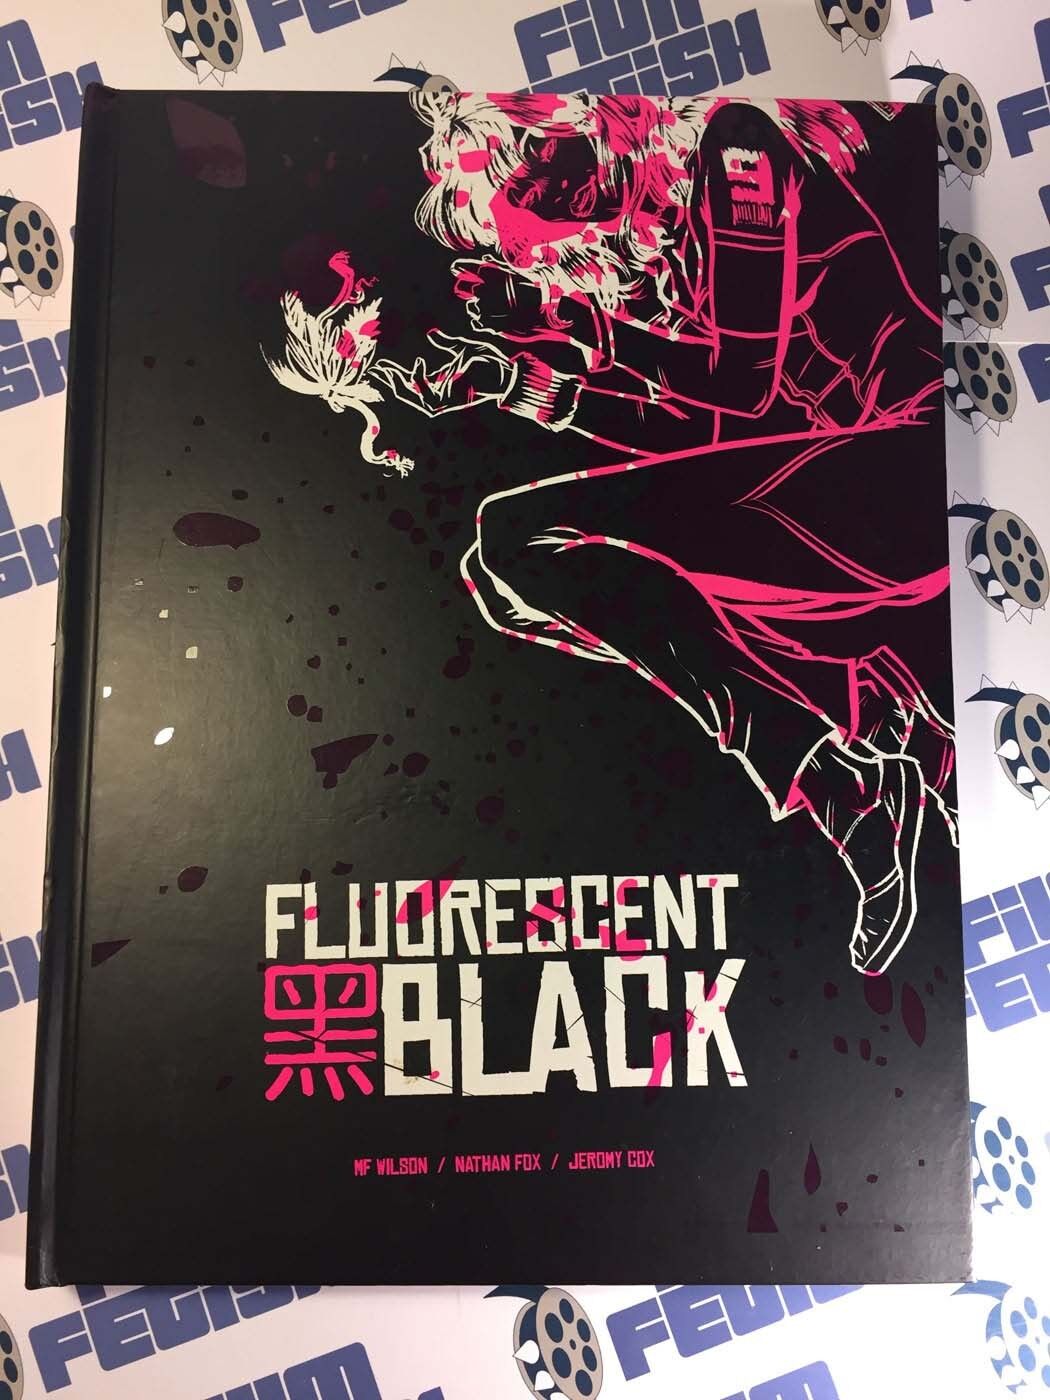 Fluorescent Black Hardcover Graphic Novel Signed MF Wilson, Nathan Fox + Print